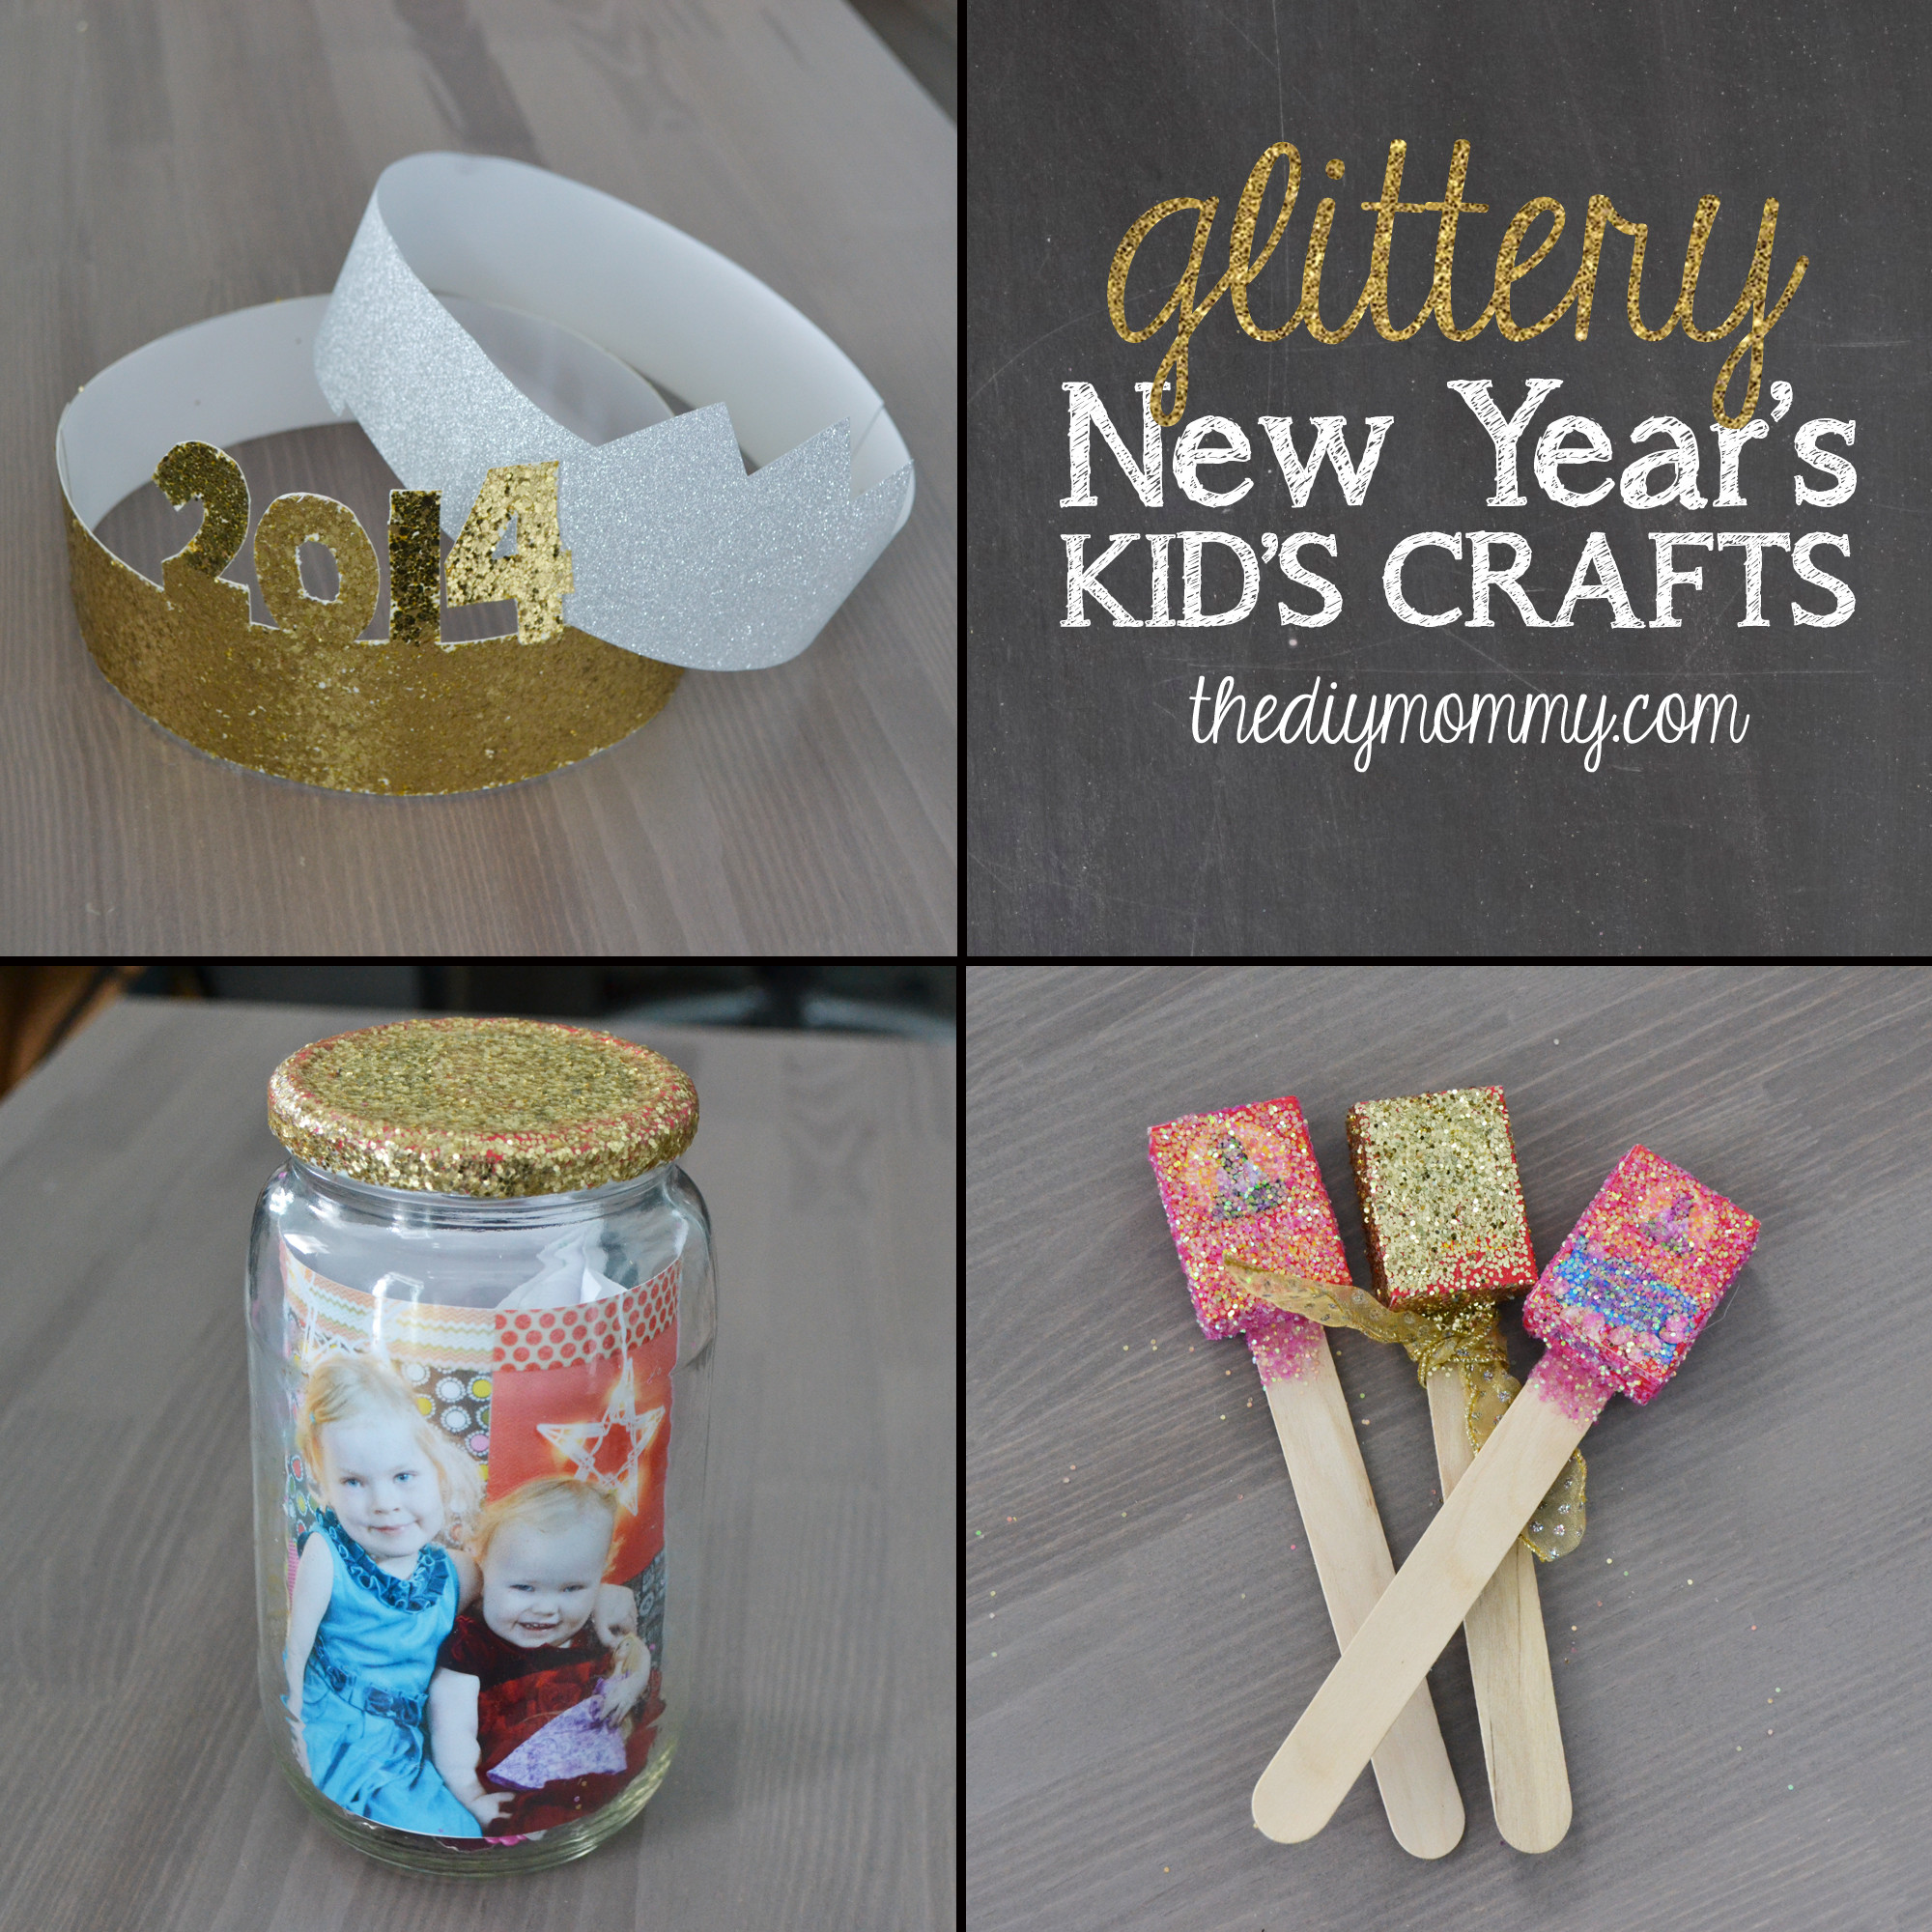 DIY Kids Crafts
 Make Glittery New Year’s Kid’s Crafts – The News